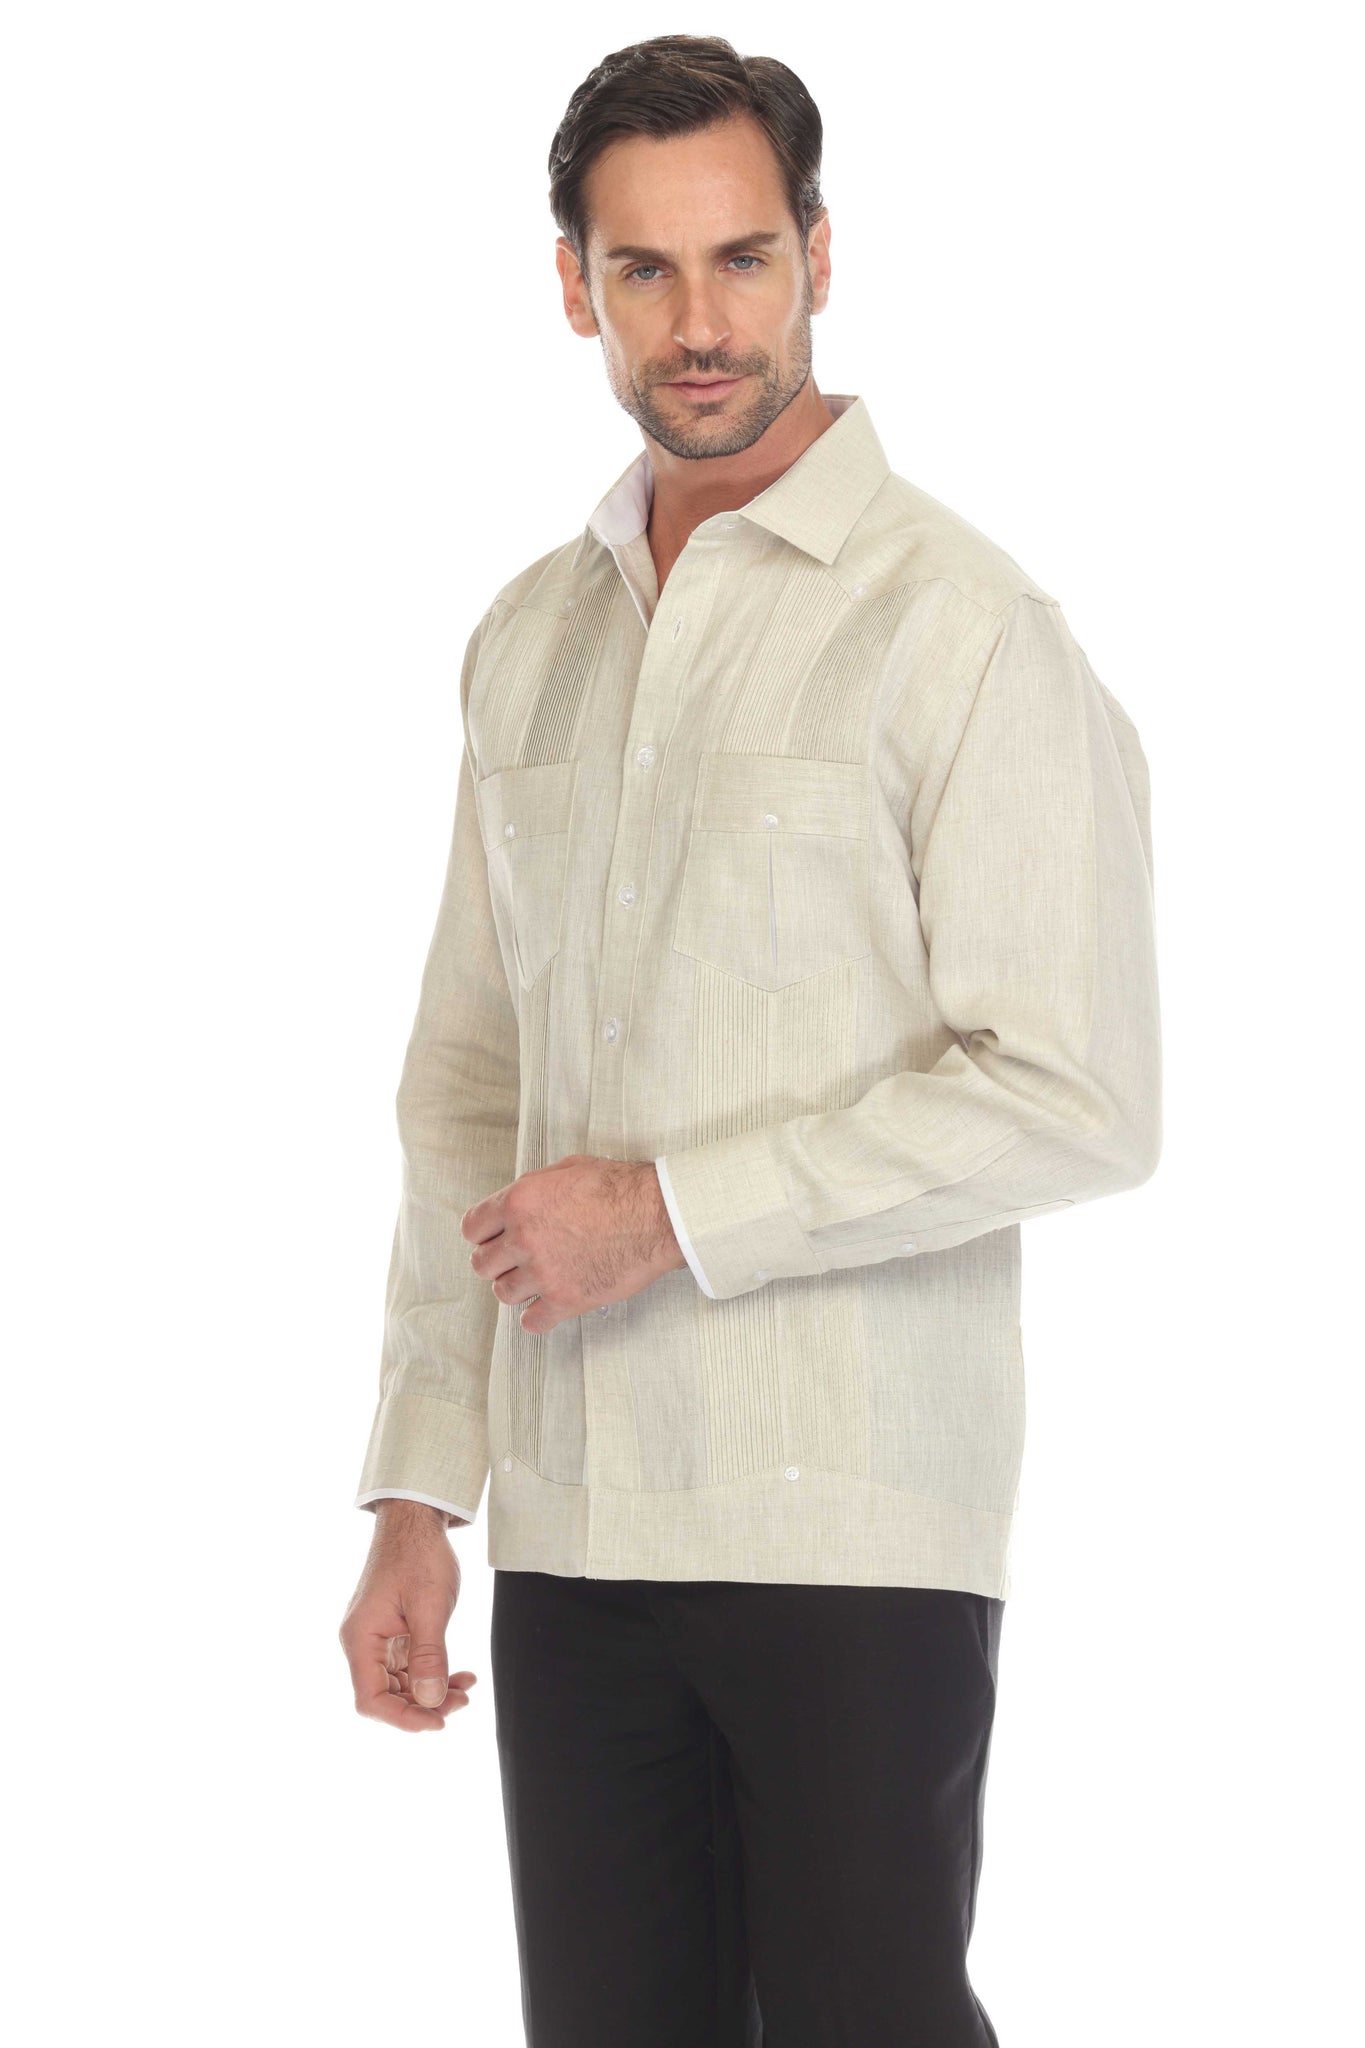 Mojito Men's 100% Linen Guayabera Shirt Long Sleeve with Print Trim Accent - Mojito Collection - Guayabera, Long Sleeve Shirt, Mens Shirt, Mojito Guayabera Shirt